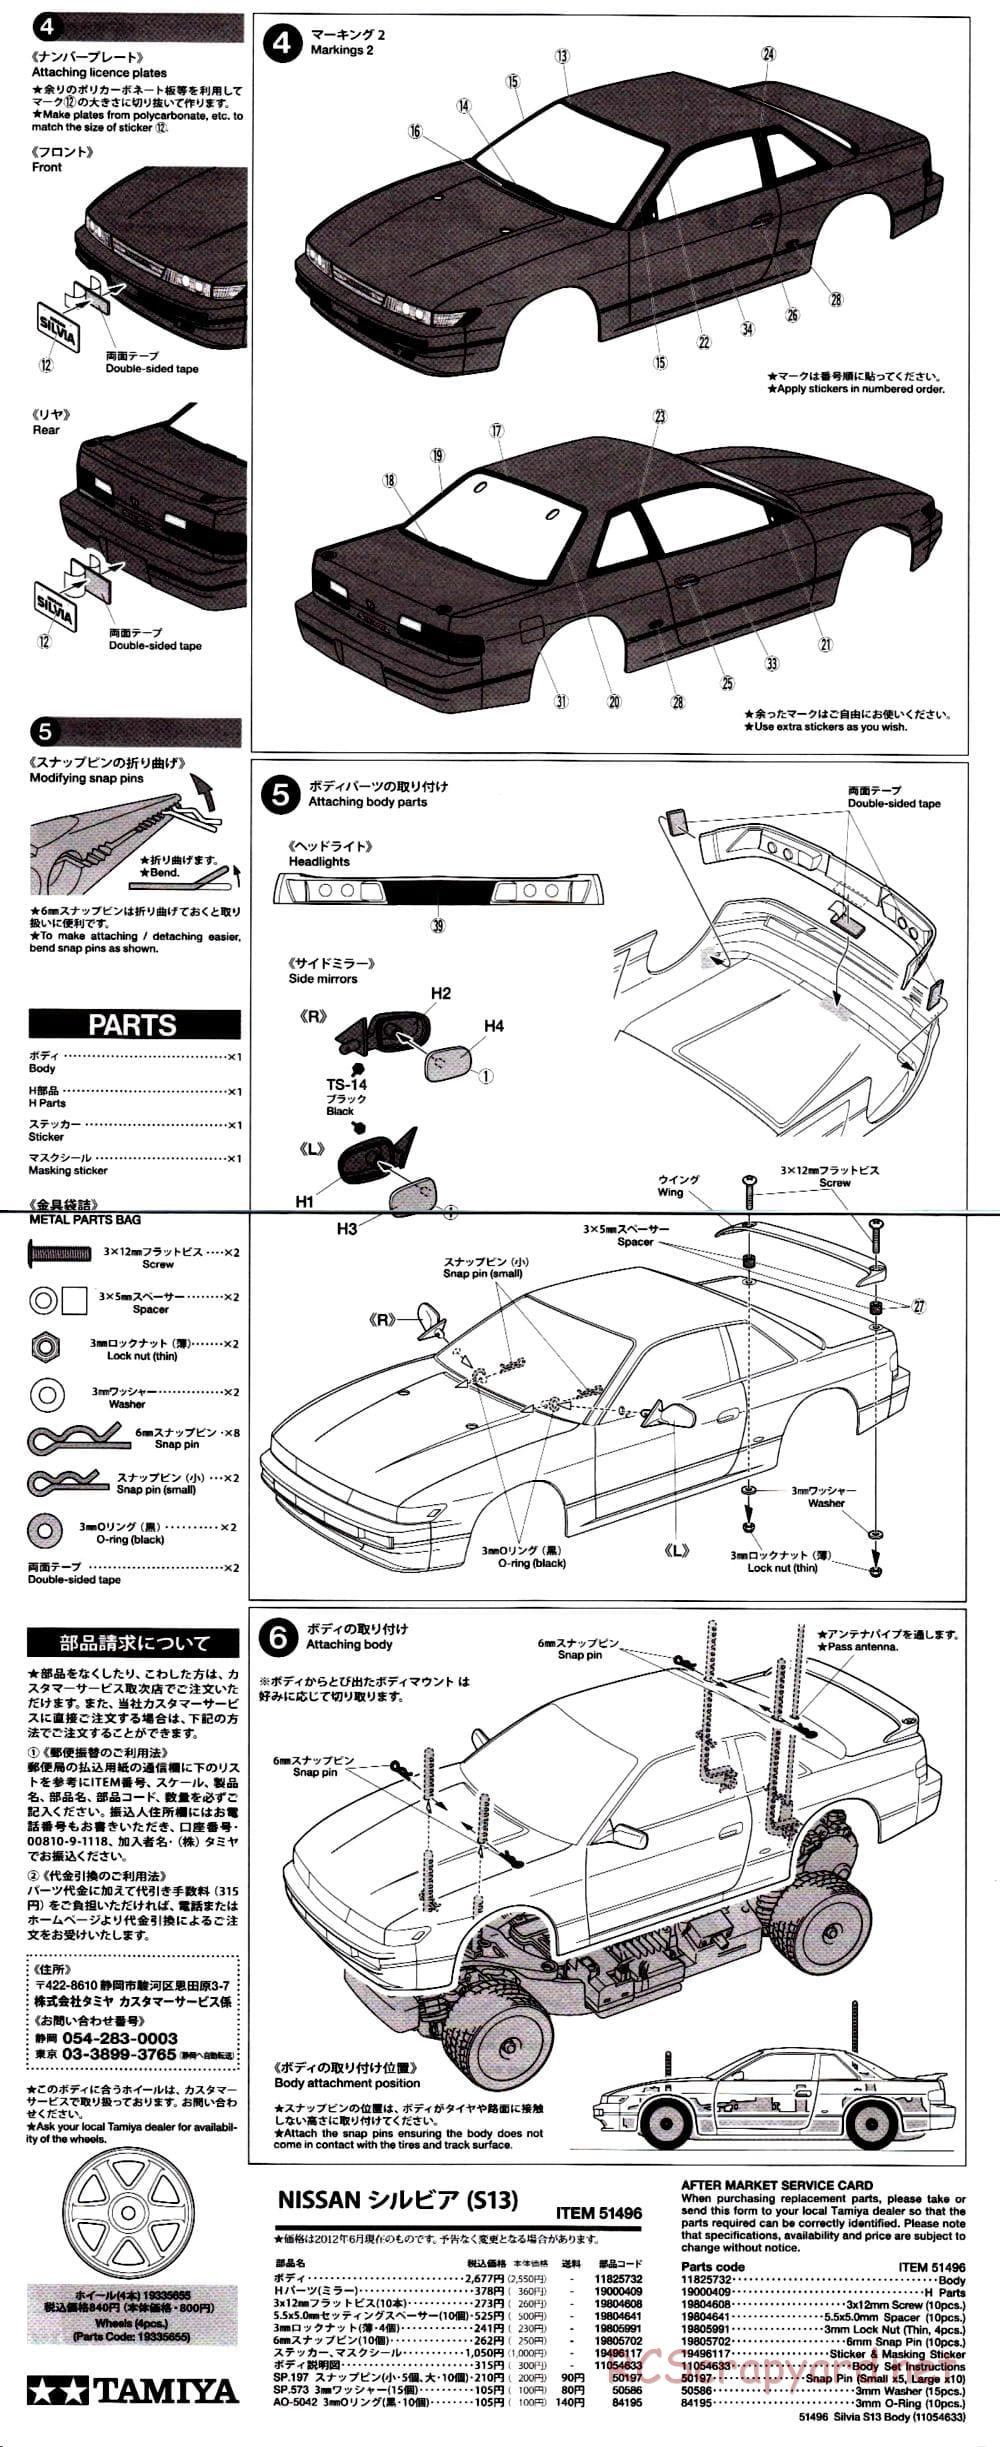 Tamiya - Nissan Silvia S-13 - M-06 Chassis - Body Manual - Page 2